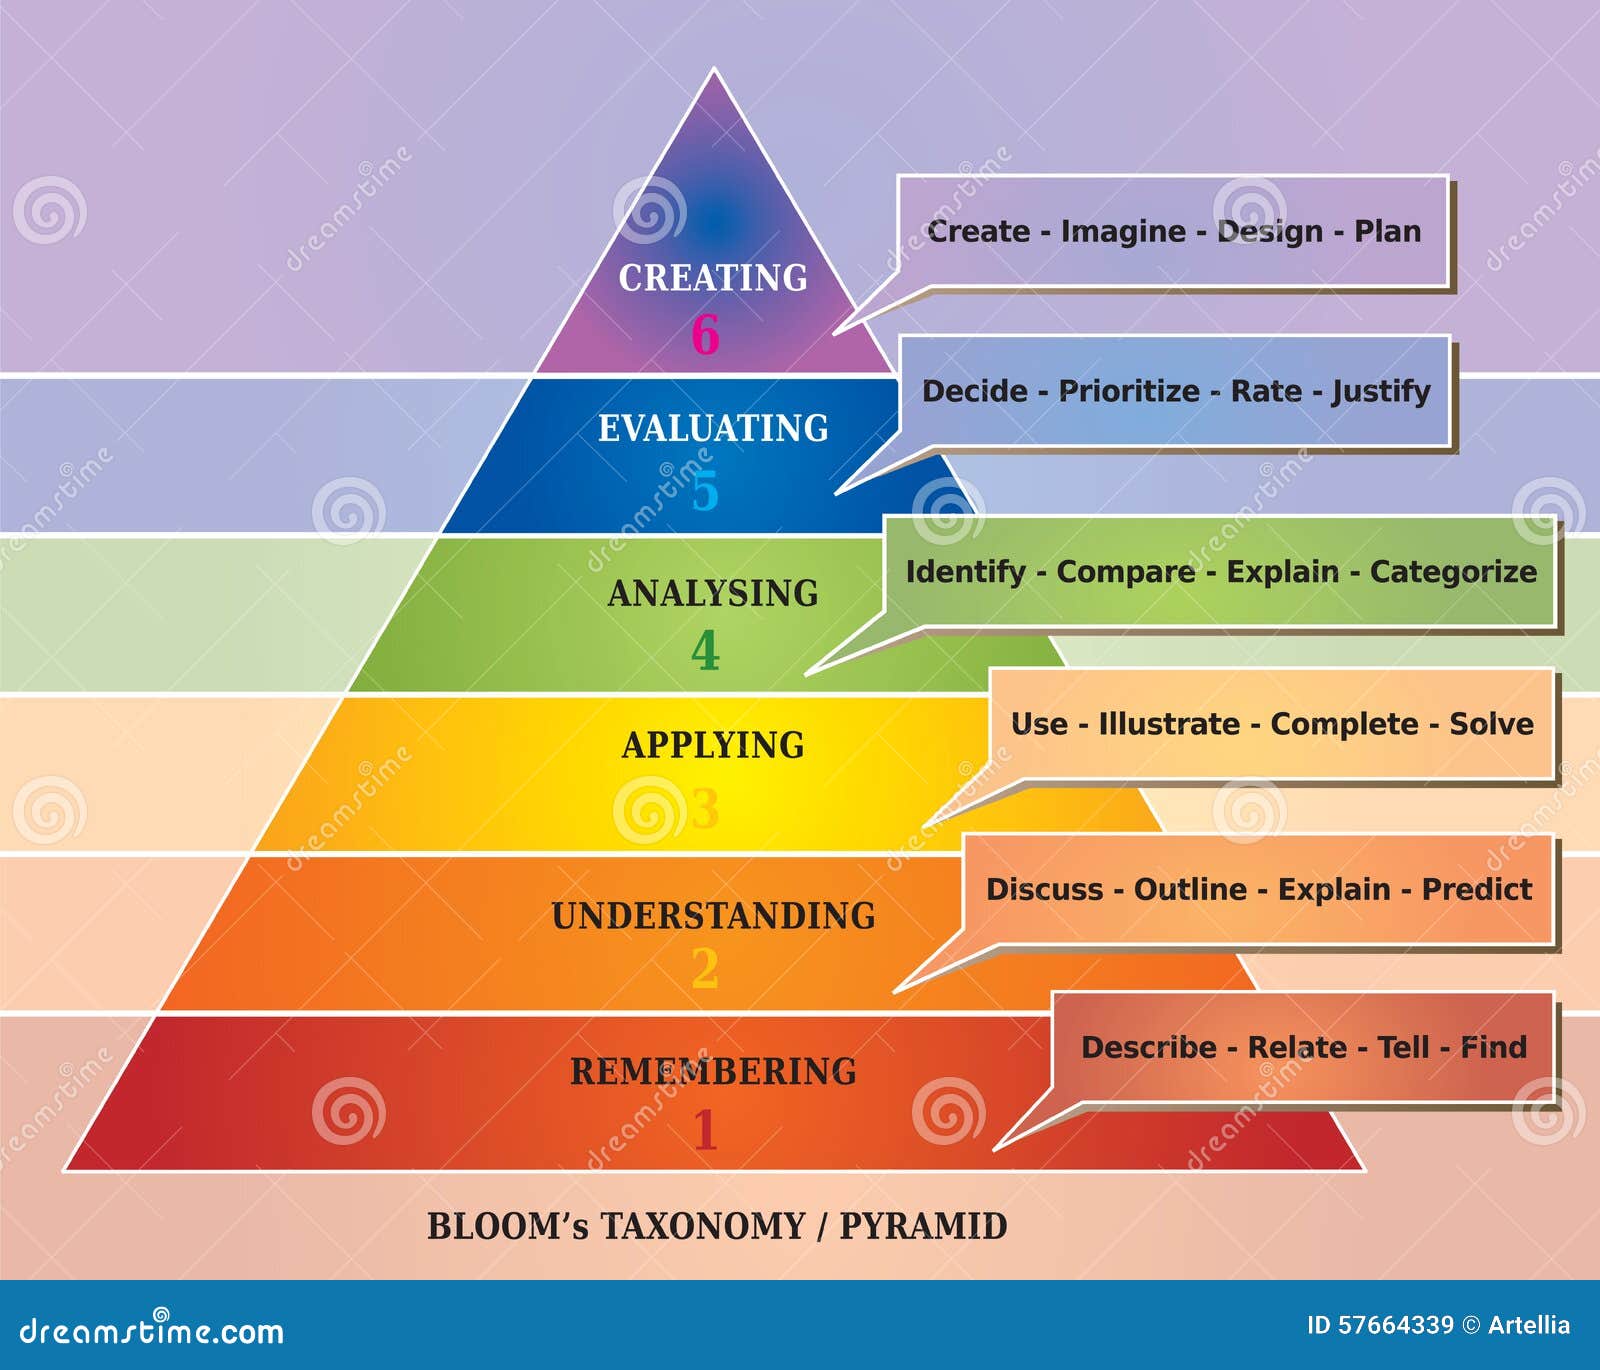 bloom's pyramid / taxonomy - educational tool - diagram